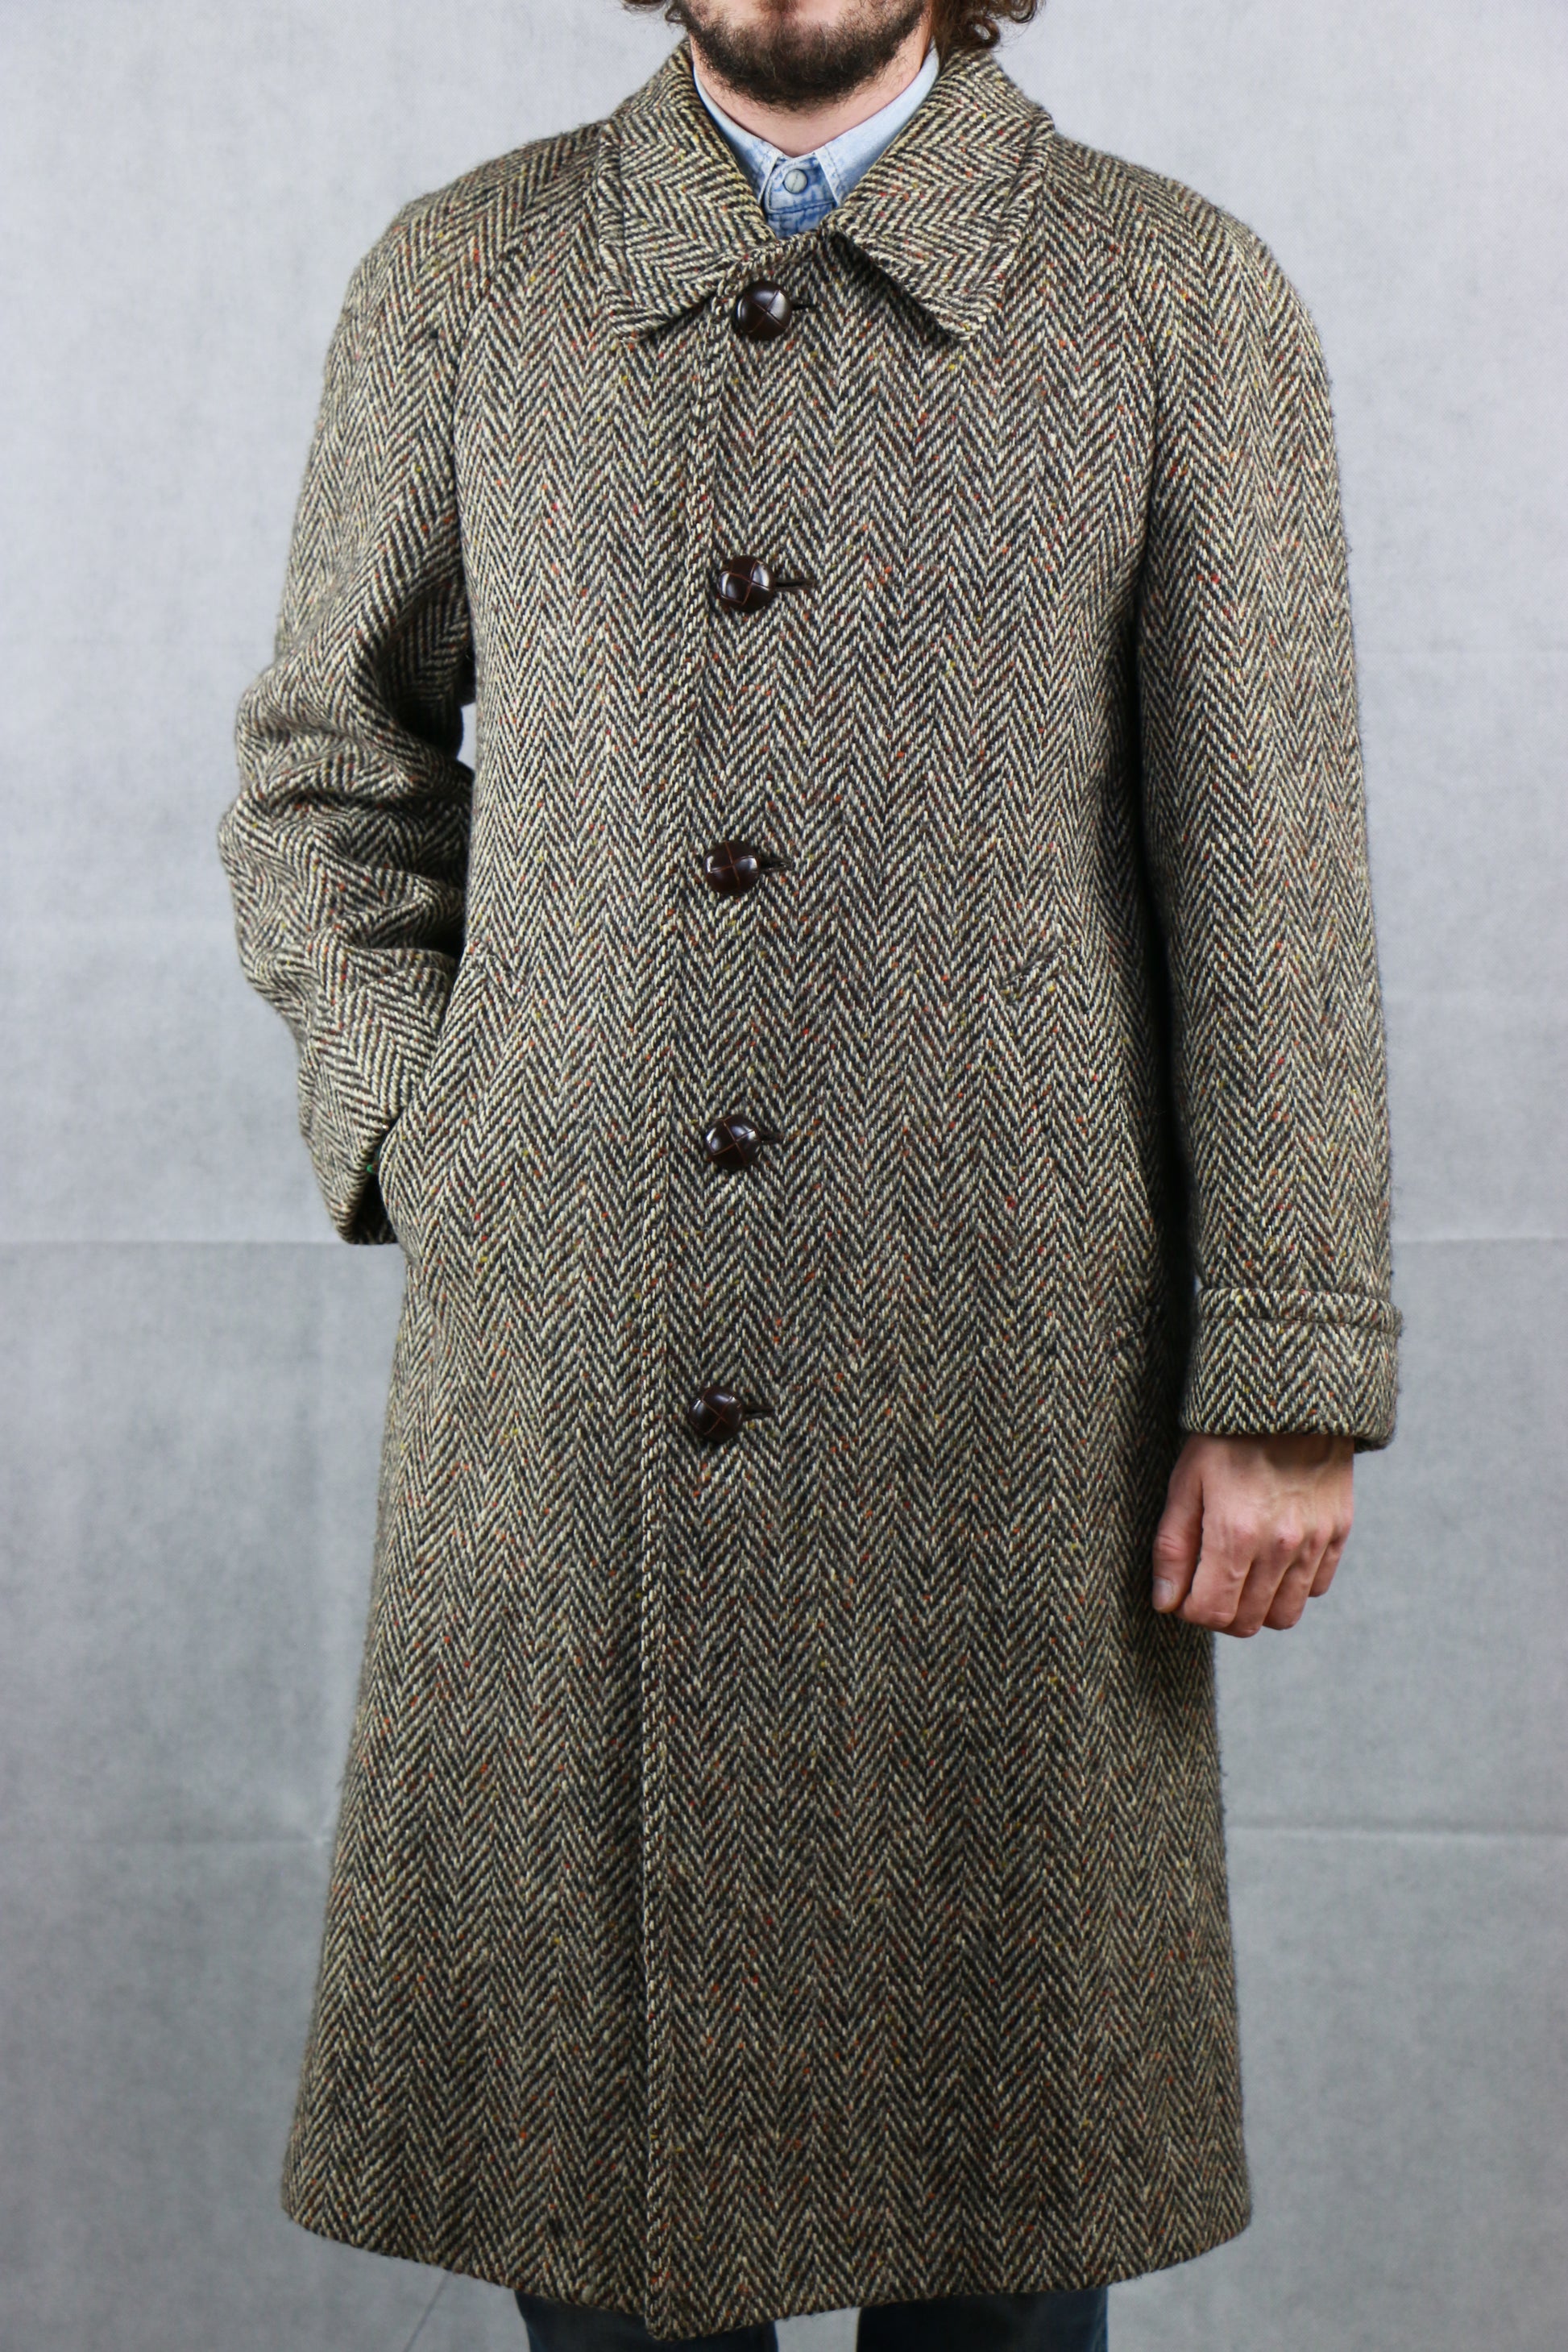 Aquascutum Irish Tweed coat - vintage clothing clochard92.com